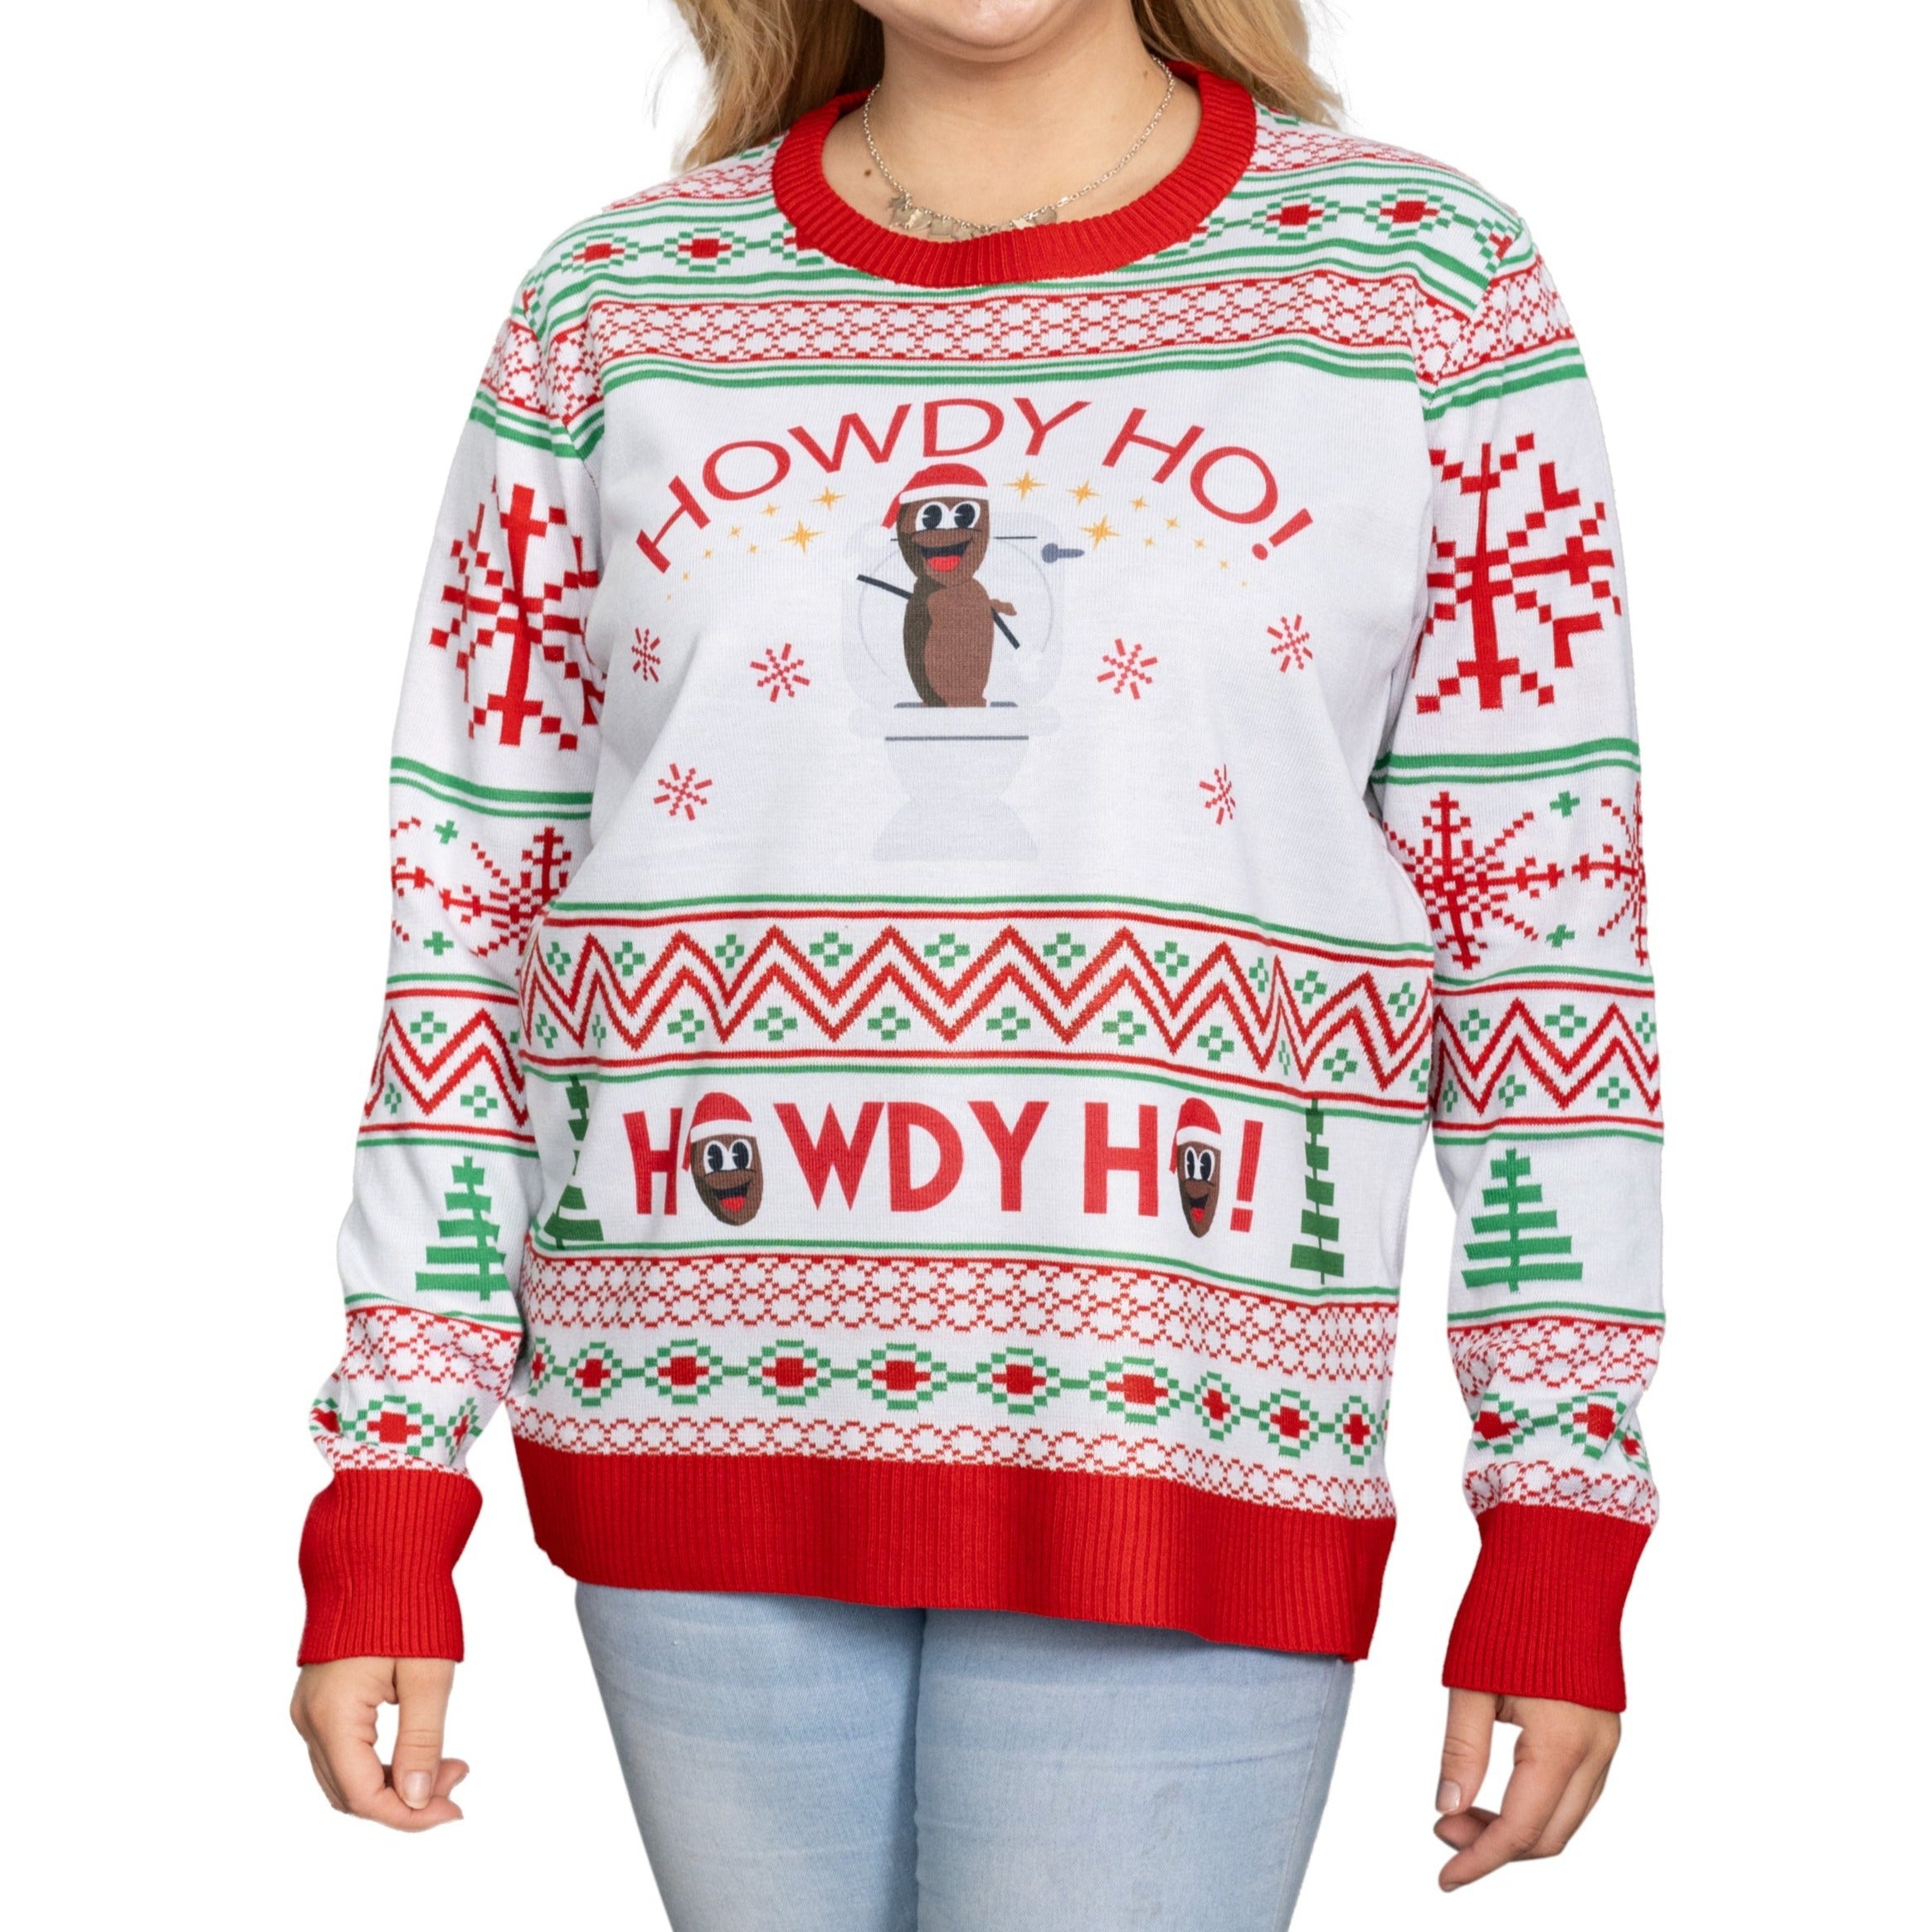 South Park | Mr. Hankey Howdy Ho! Sweater